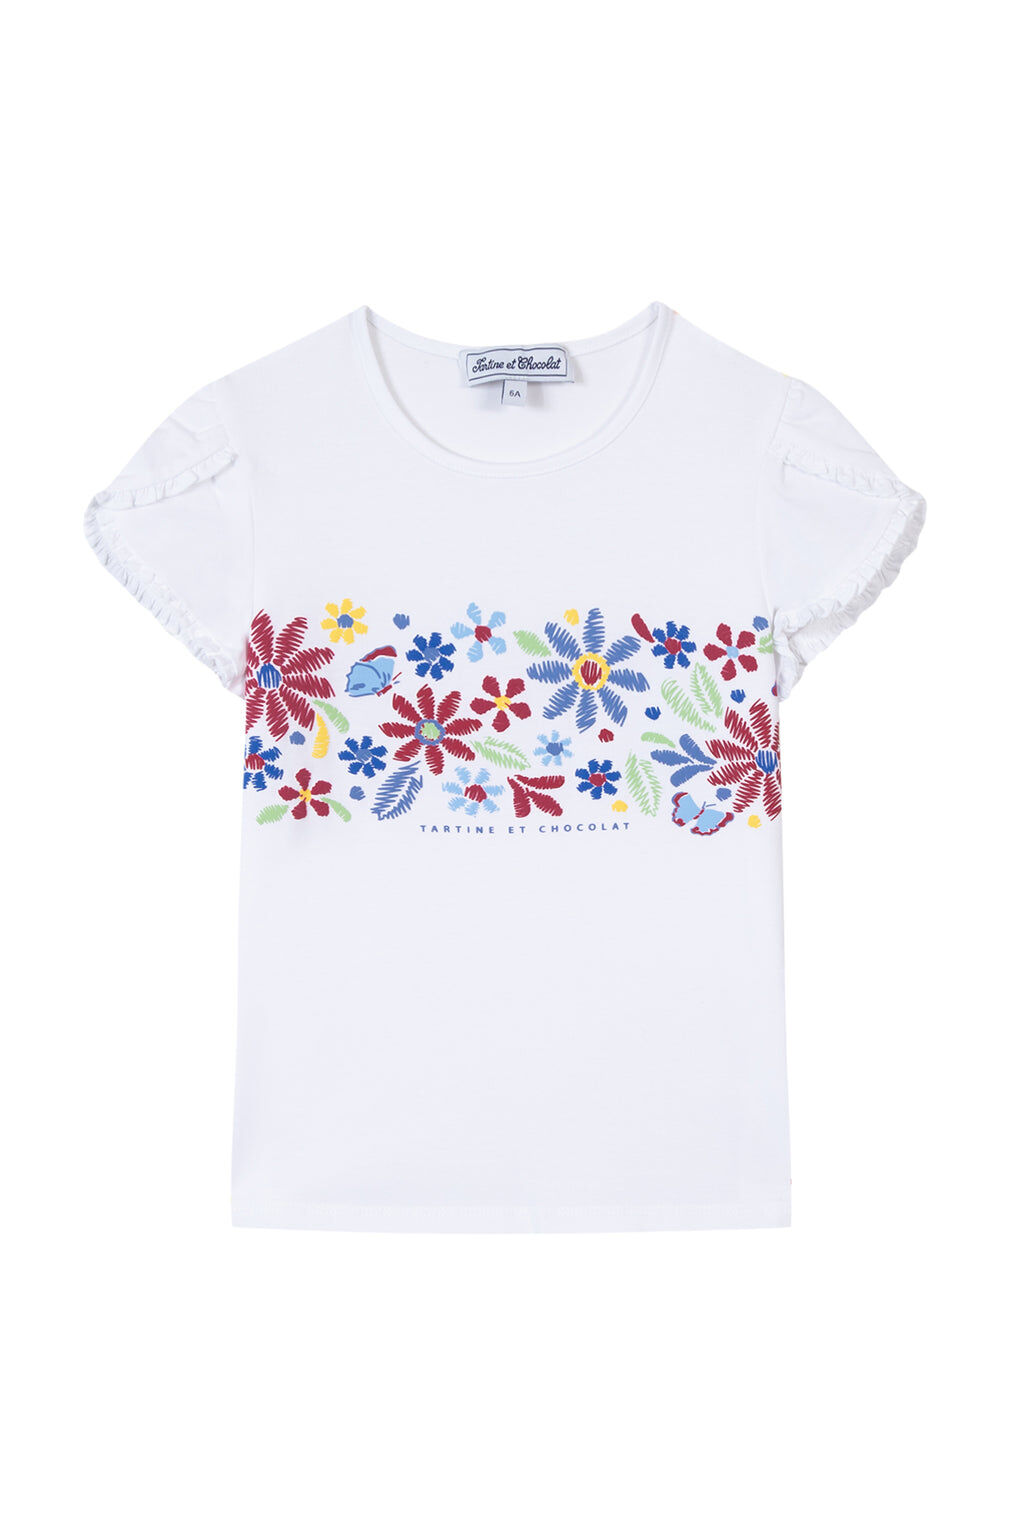 T-shirt - Bougainvillier illustration fleur